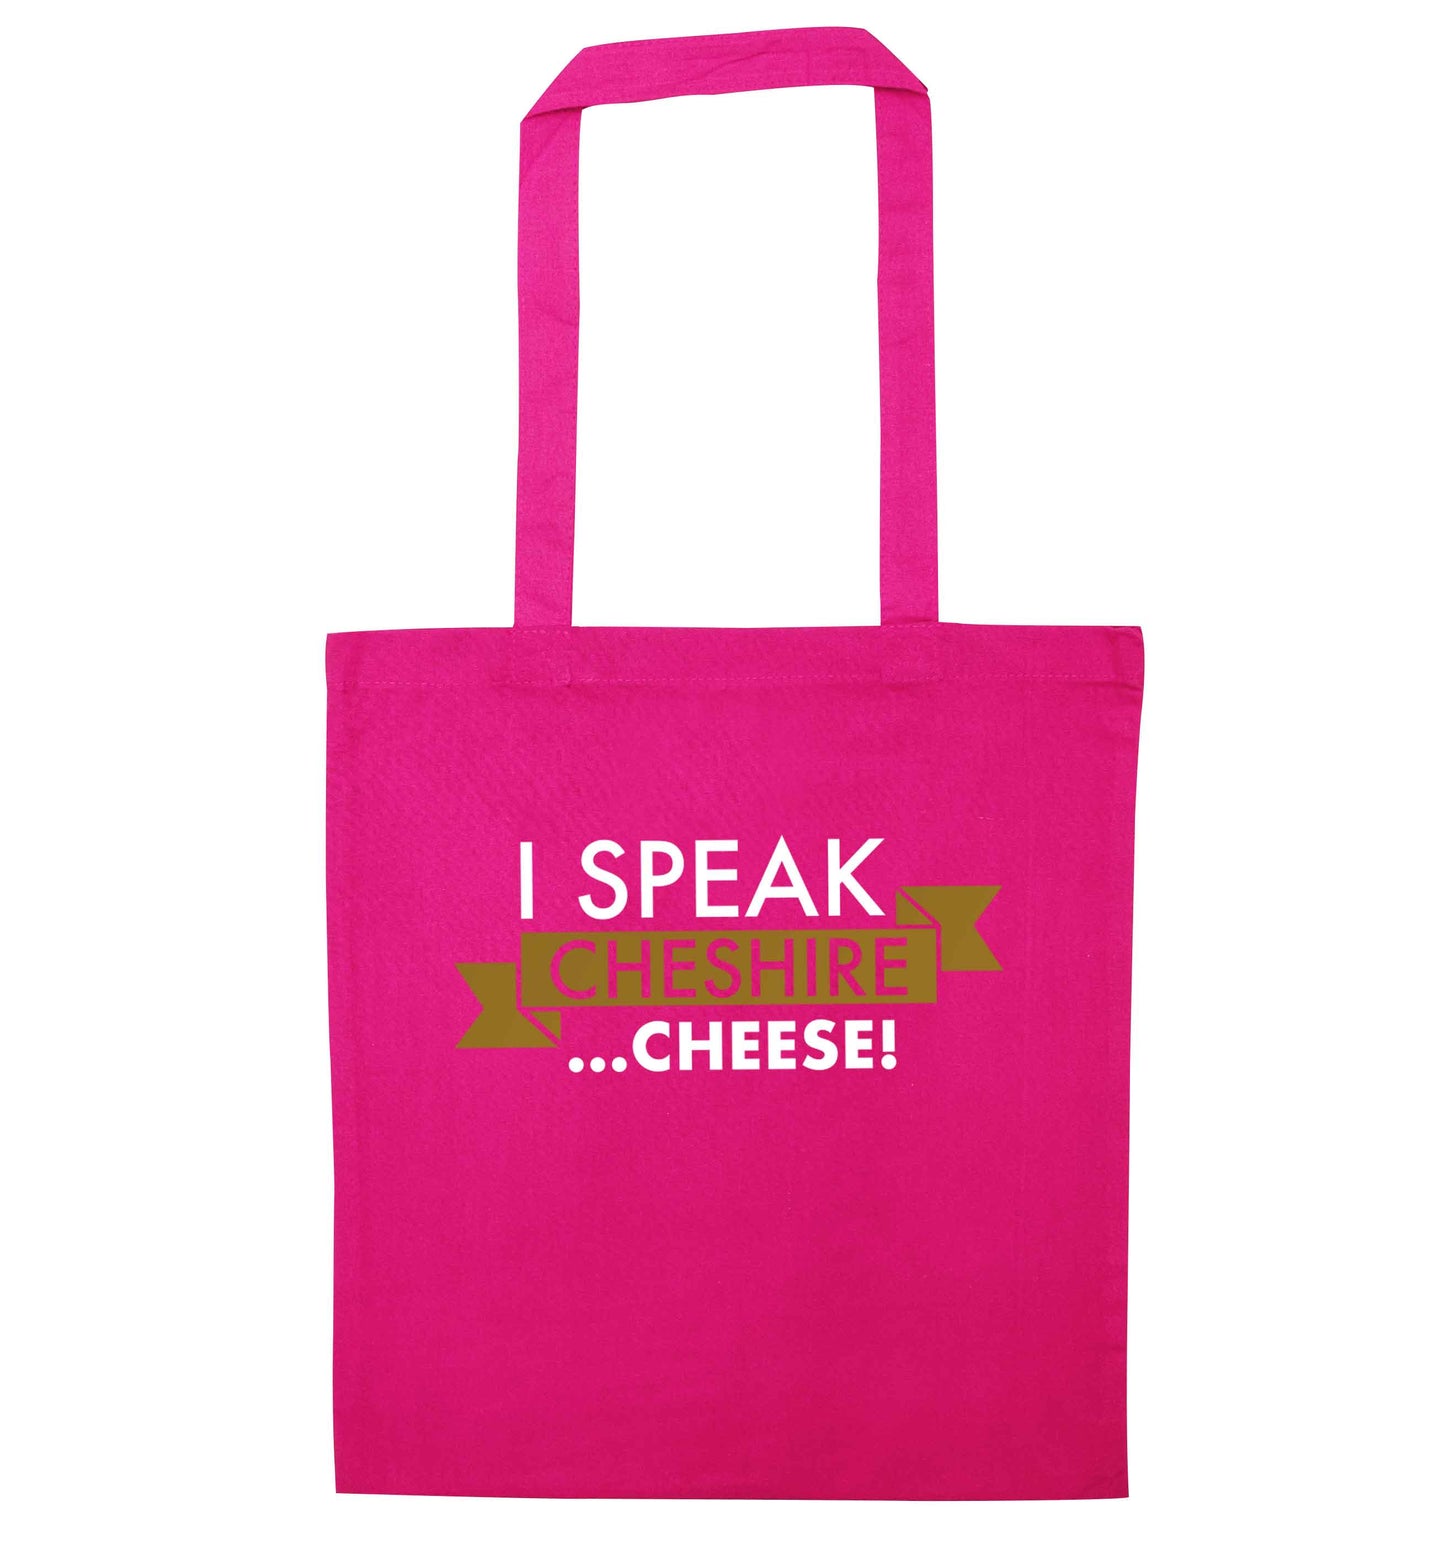 I speak Cheshire cheese pink tote bag